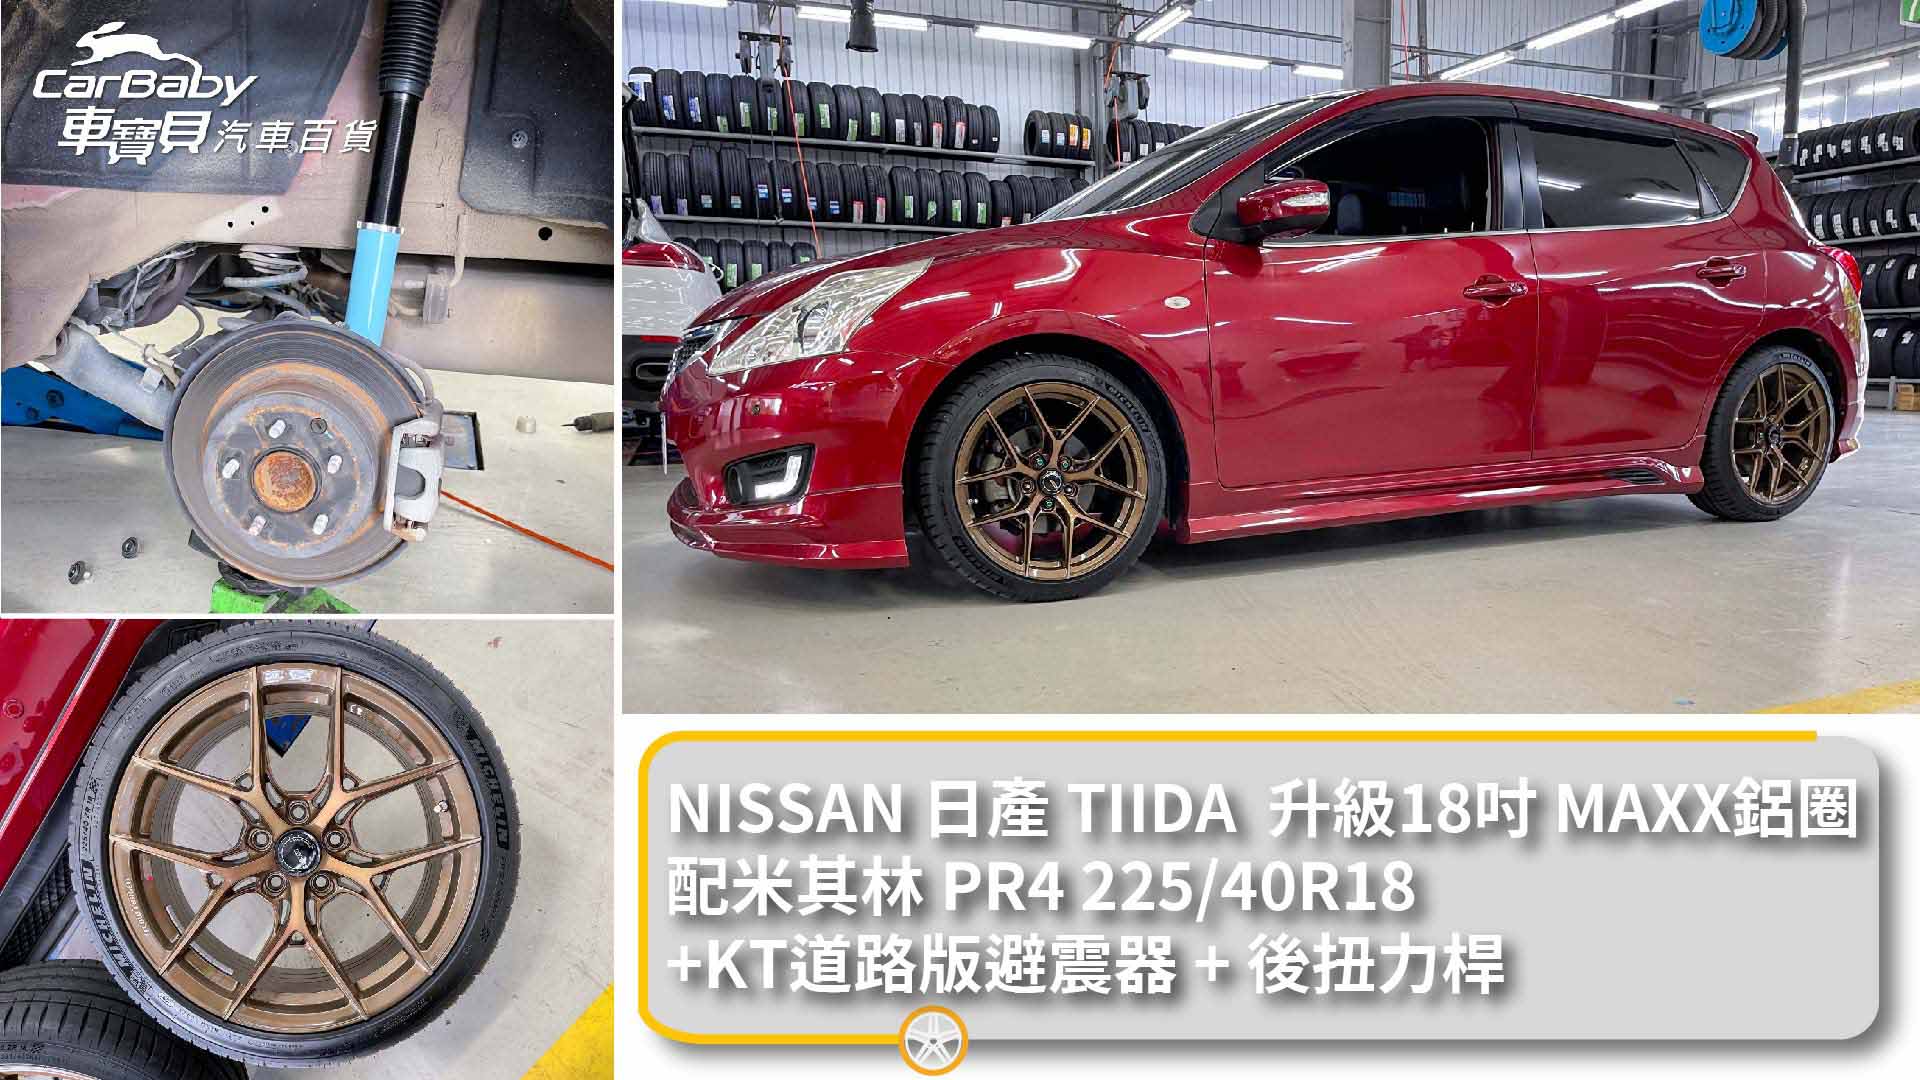 NISSAN 日產 TIIDA 2016年 升級 KT RAICNG 道路版可調式避震器+ SUMMIT 後扭力拉桿+18吋MAXX鋁圈+米其林輪胎Primacy4 225/40R18，安裝於車寶貝汽車百貨五權西店。